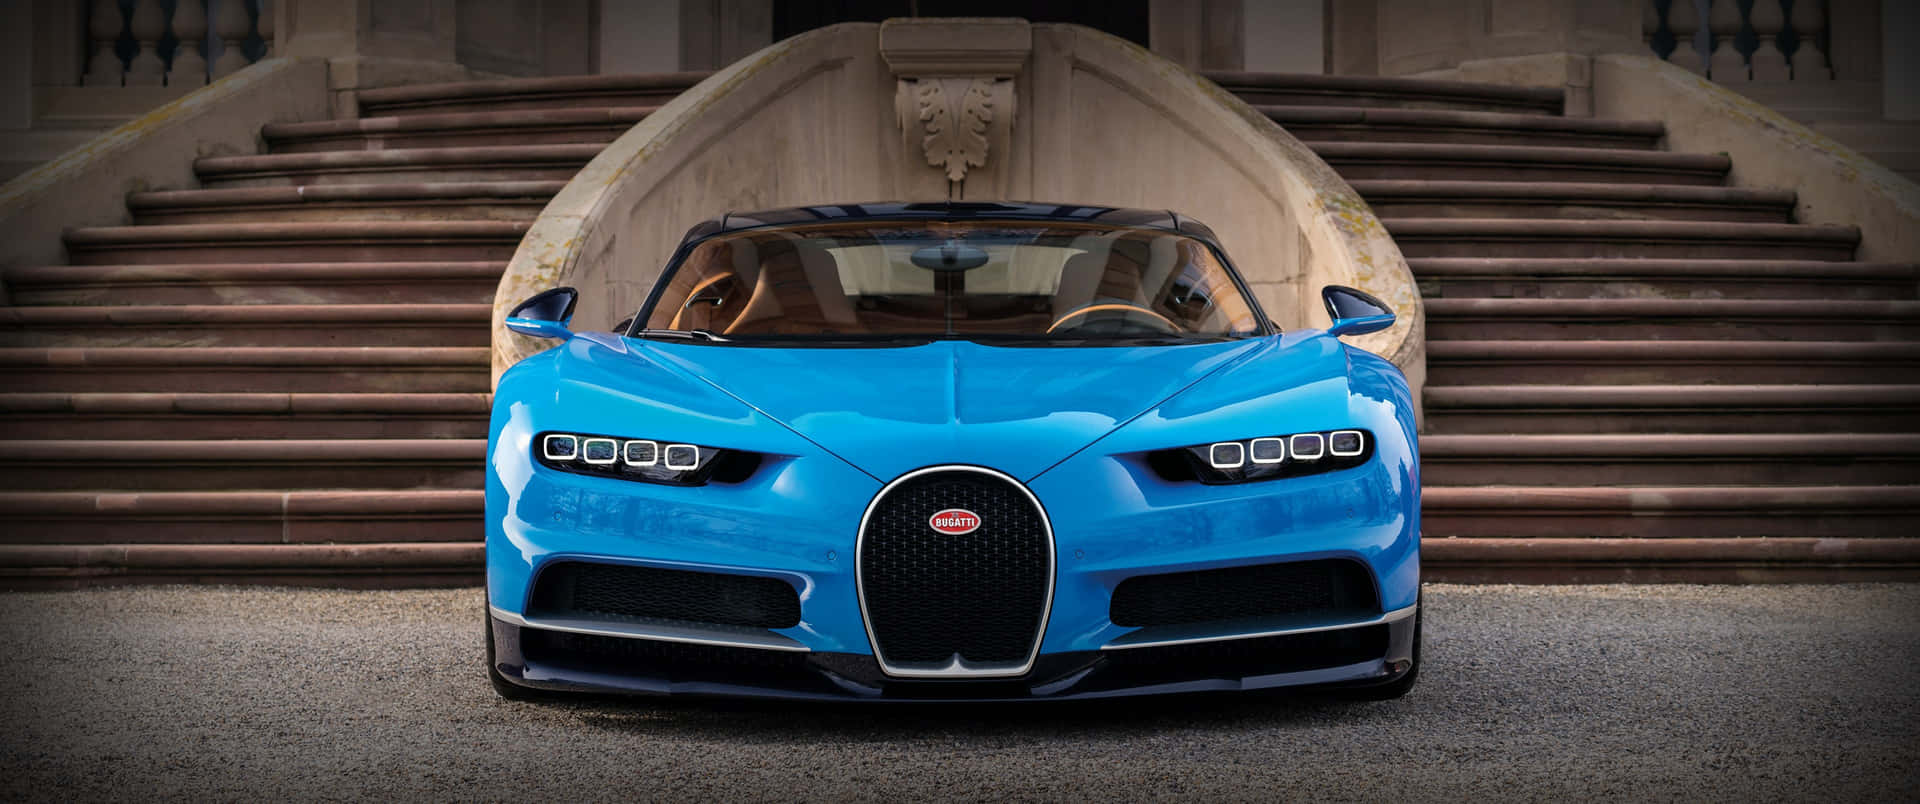 3440x1440 Blue Bugatti Chiron Sports Car Wallpaper